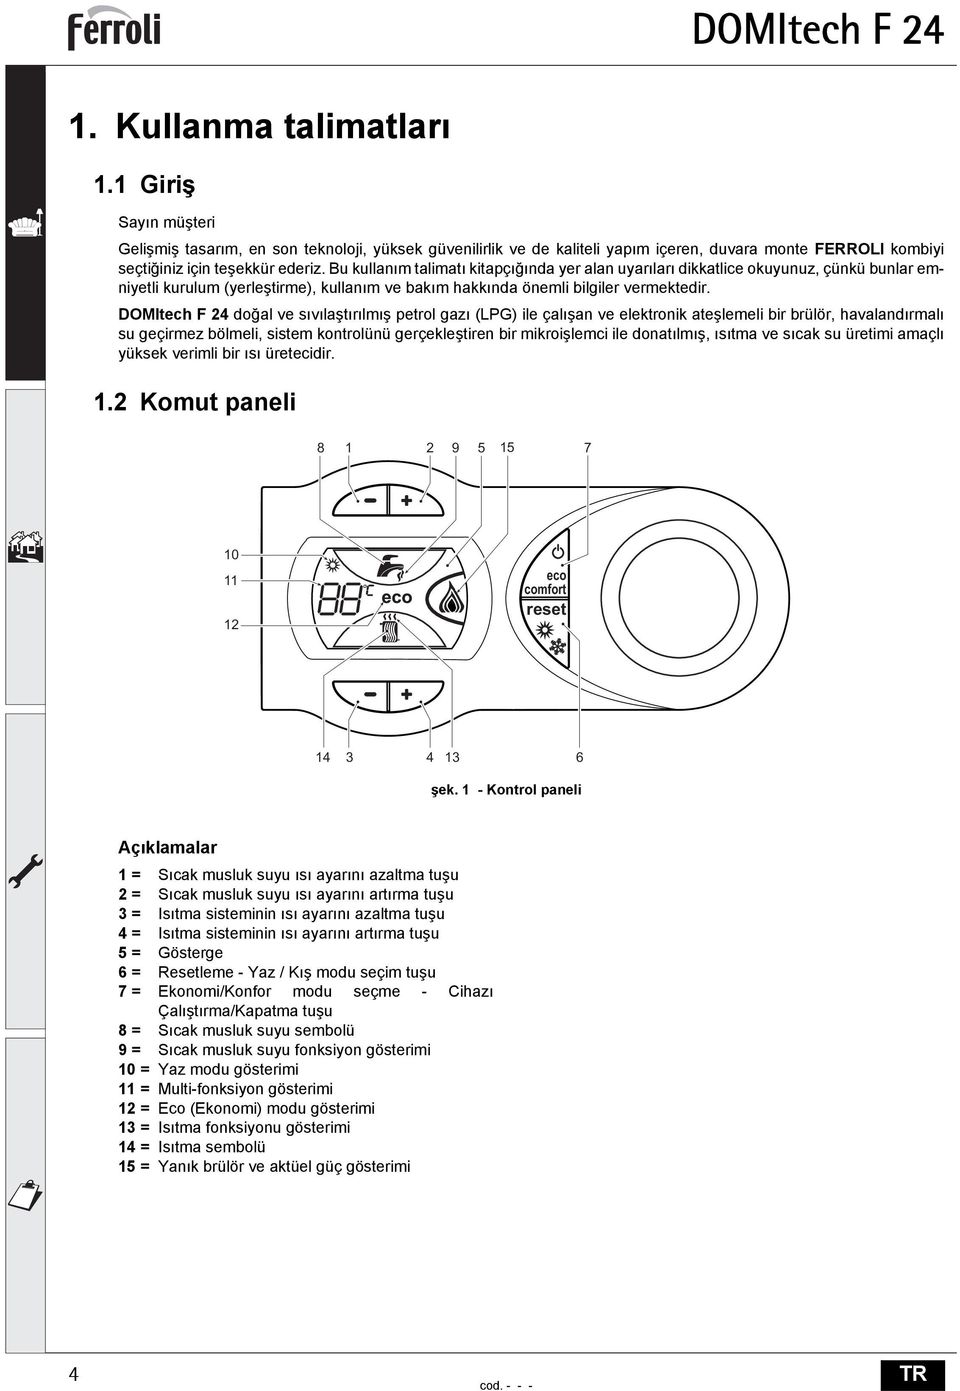 cod. - - DOMItech F 24 KULLANMA, MONTAJ VE BAKIM KILAVUZU - PDF Free  Download